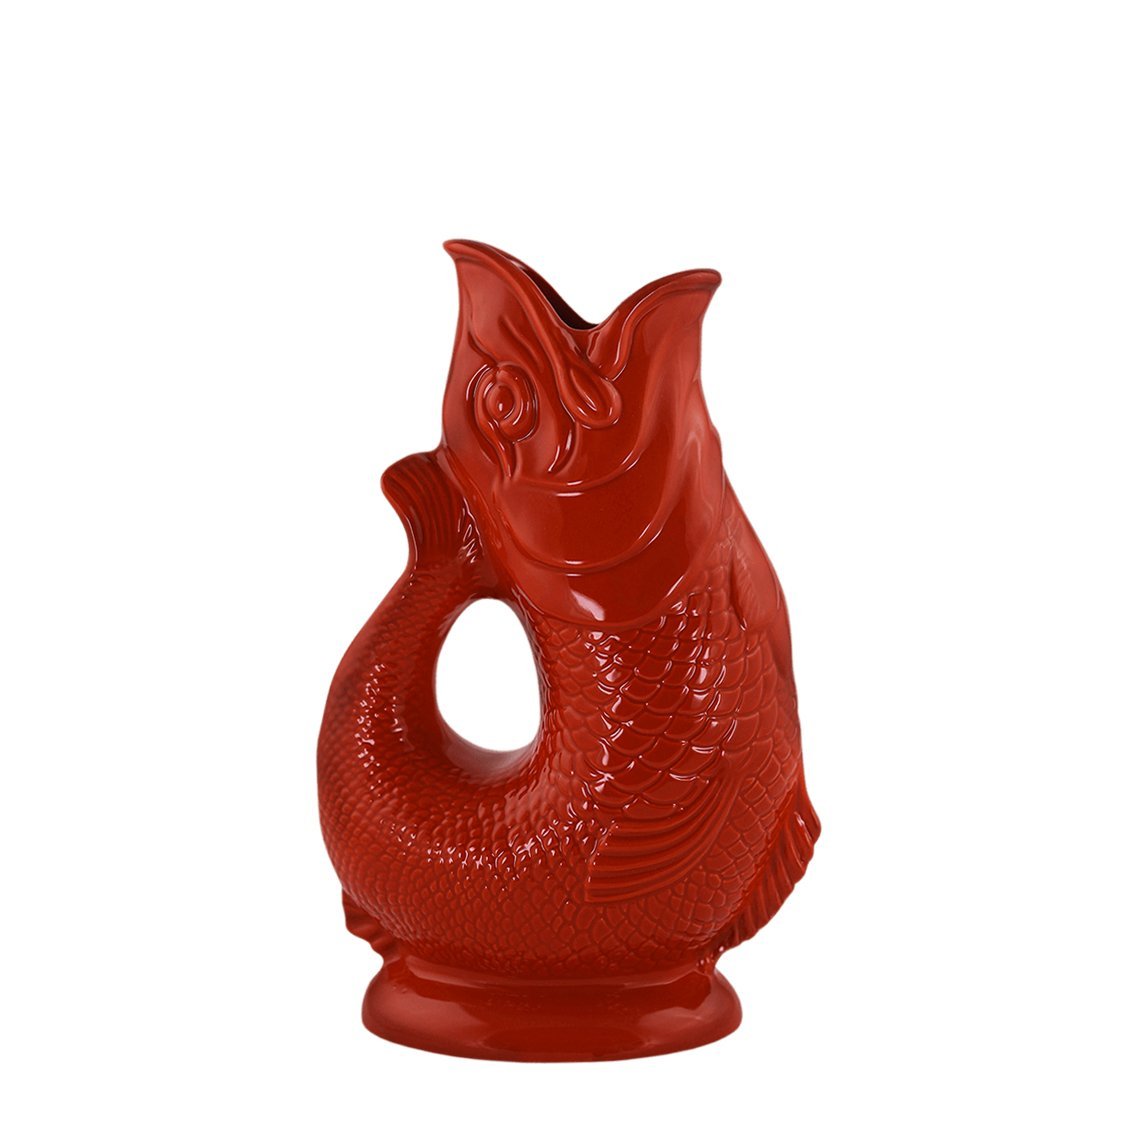 Red Ceramic Gluggle Jug - Large 700ml - BRIT LOCKER